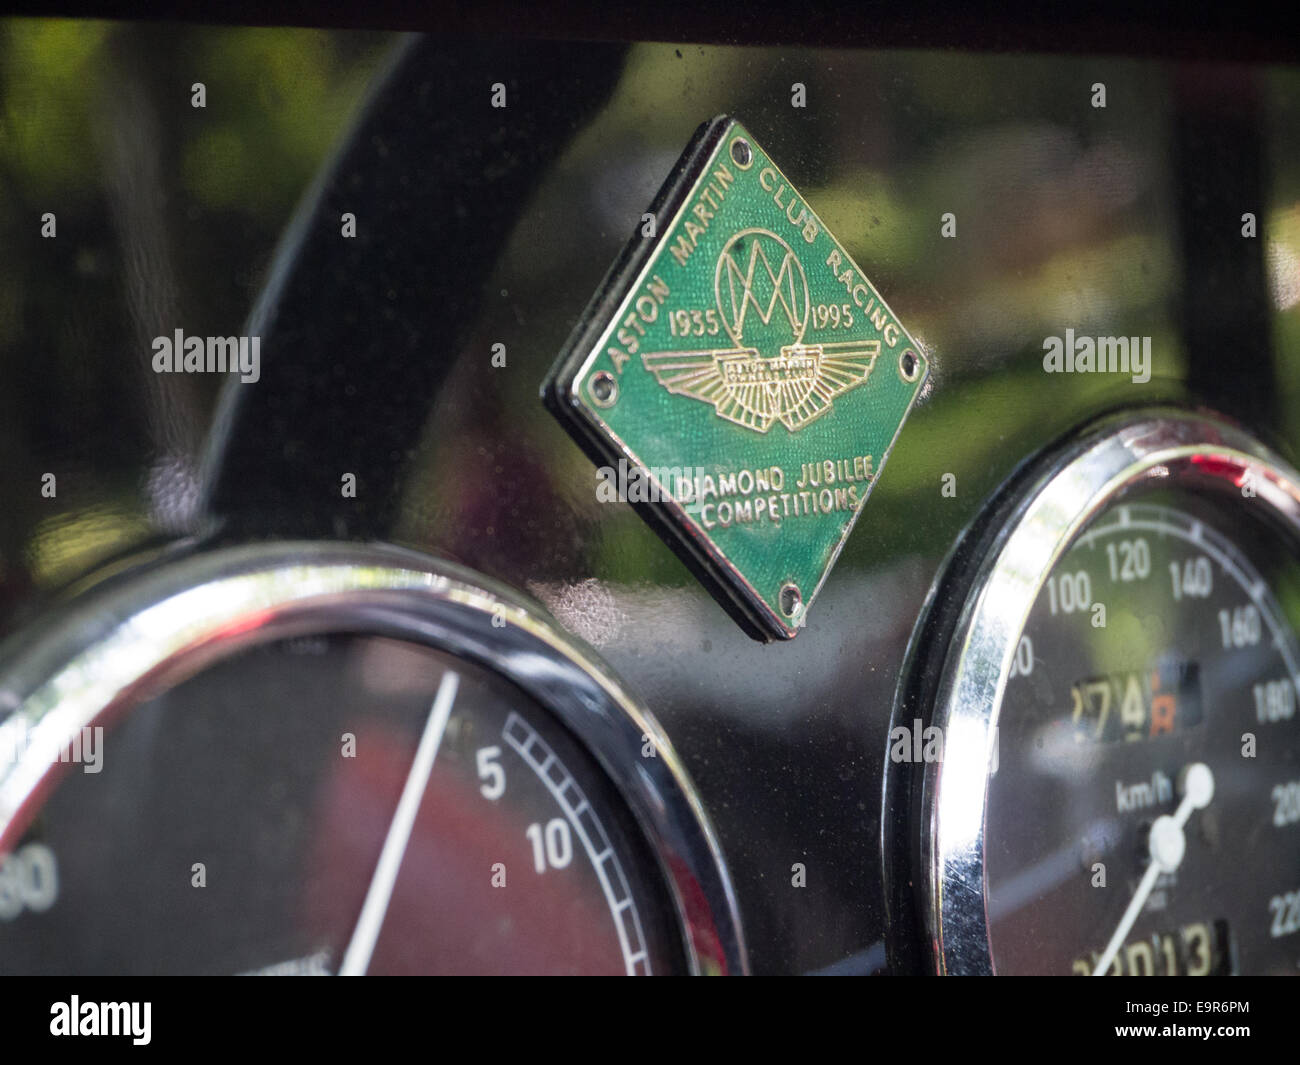 Aston Martin club racing logo on a classic racing instrument panel Stock Photo